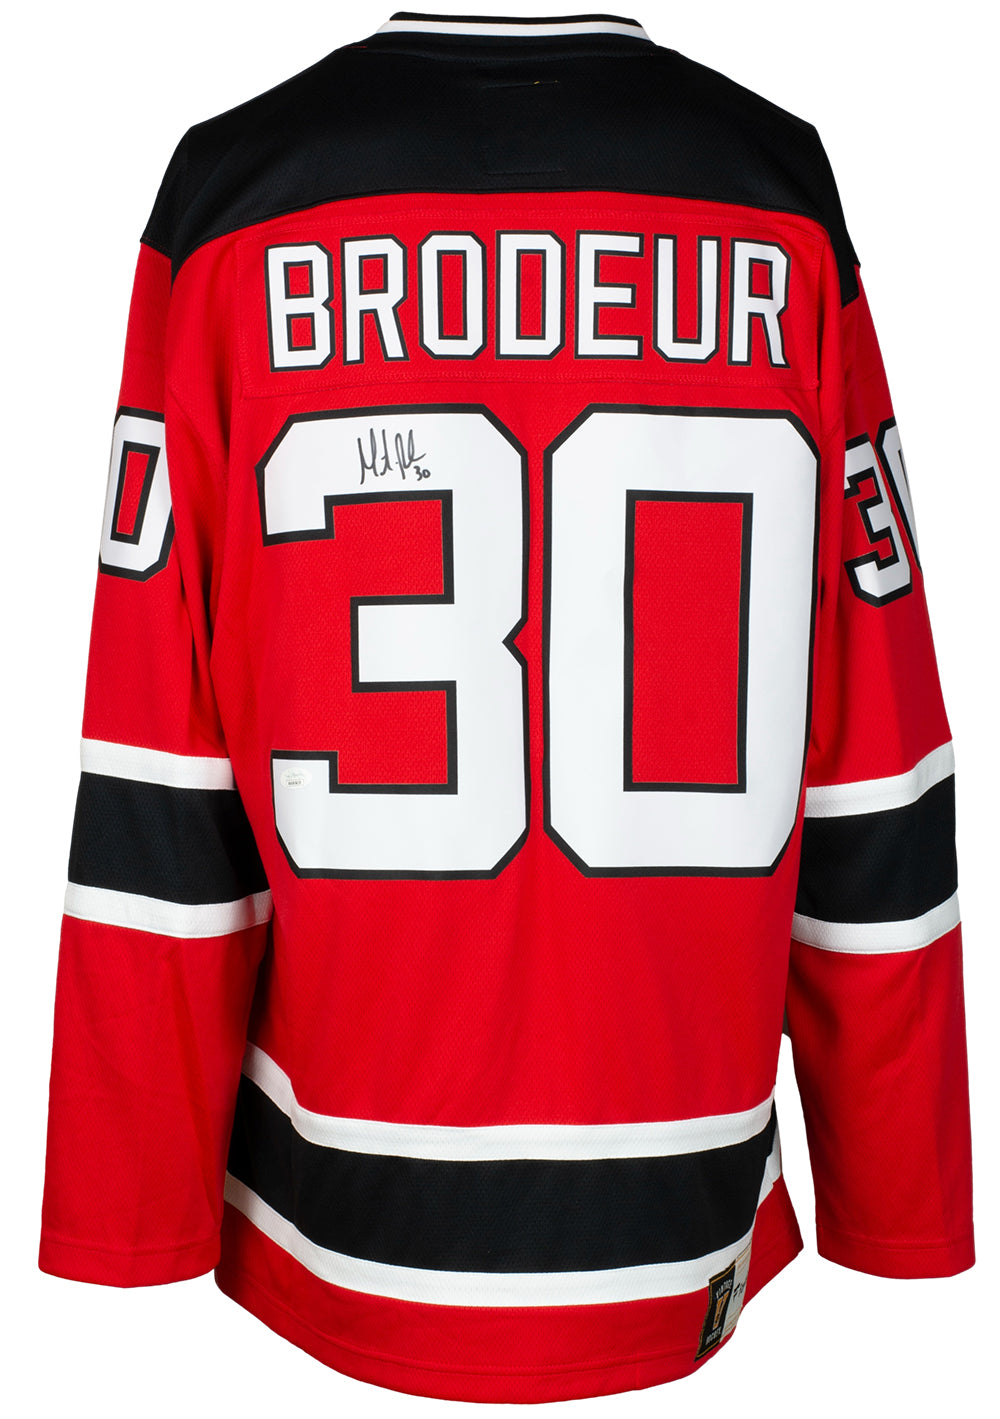 Sports Integrity Martin Brodeur Signed Red Fanatics New Jersey Devils Vintage Hockey Jersey JSA